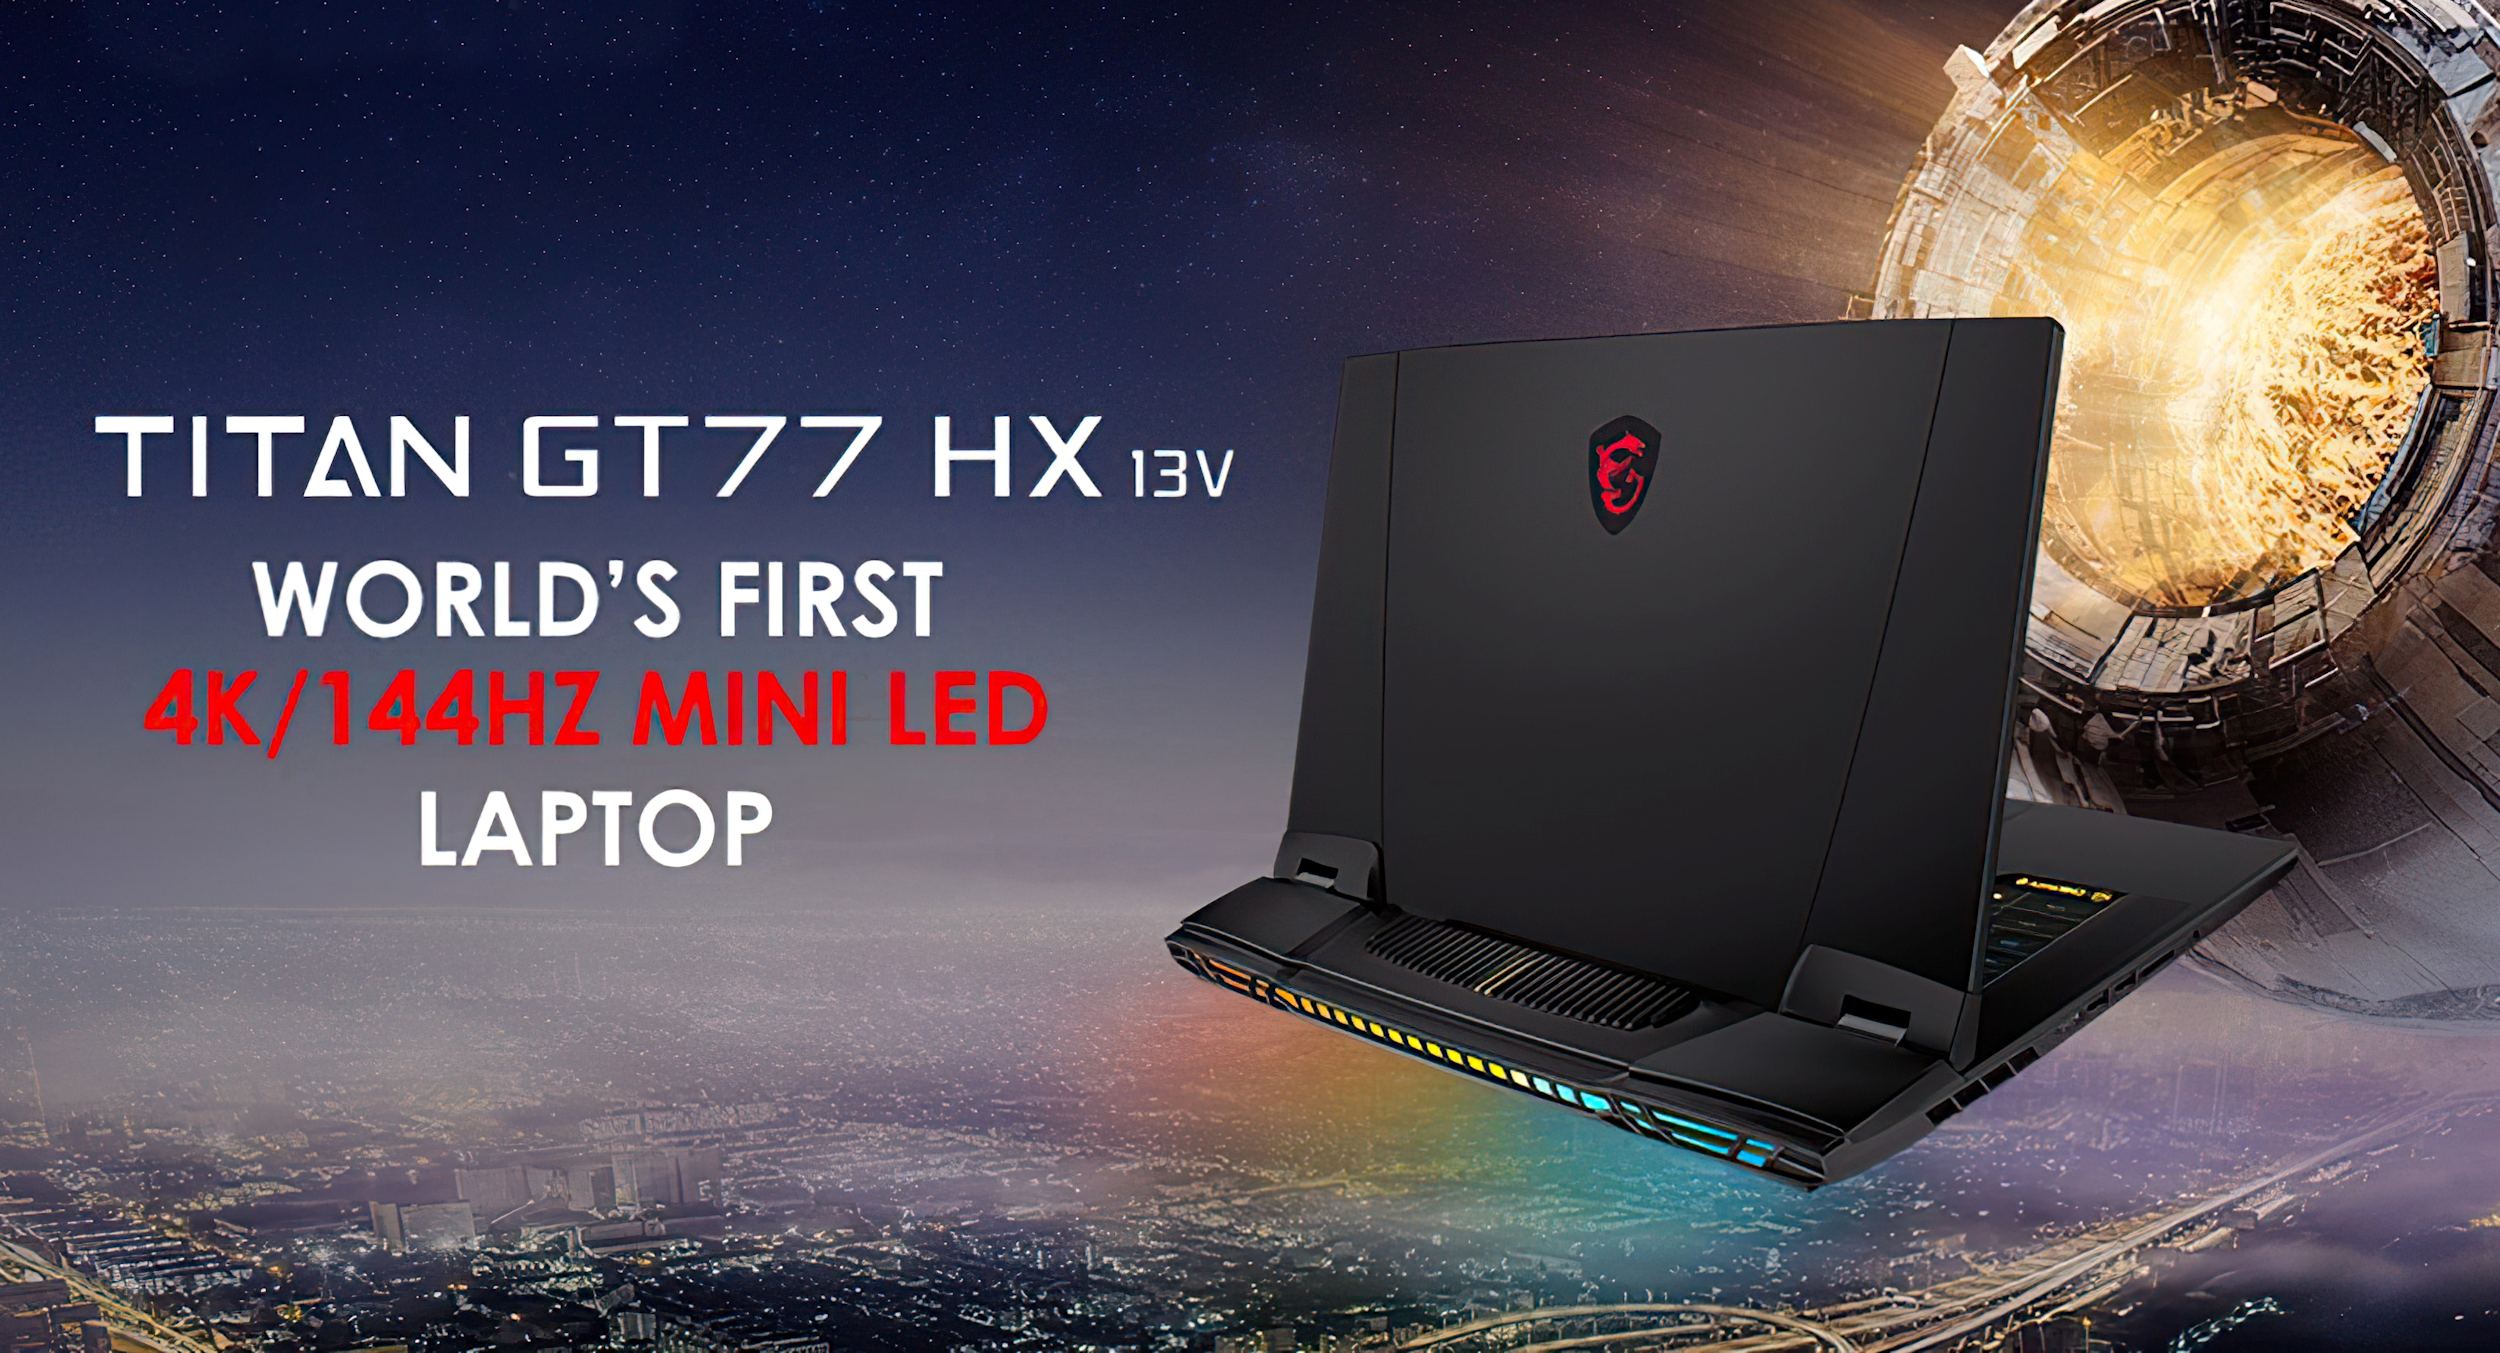 MSI confirms TITAN GT77 HX 13V gaming laptop with 4K 144Hz MiniLED display